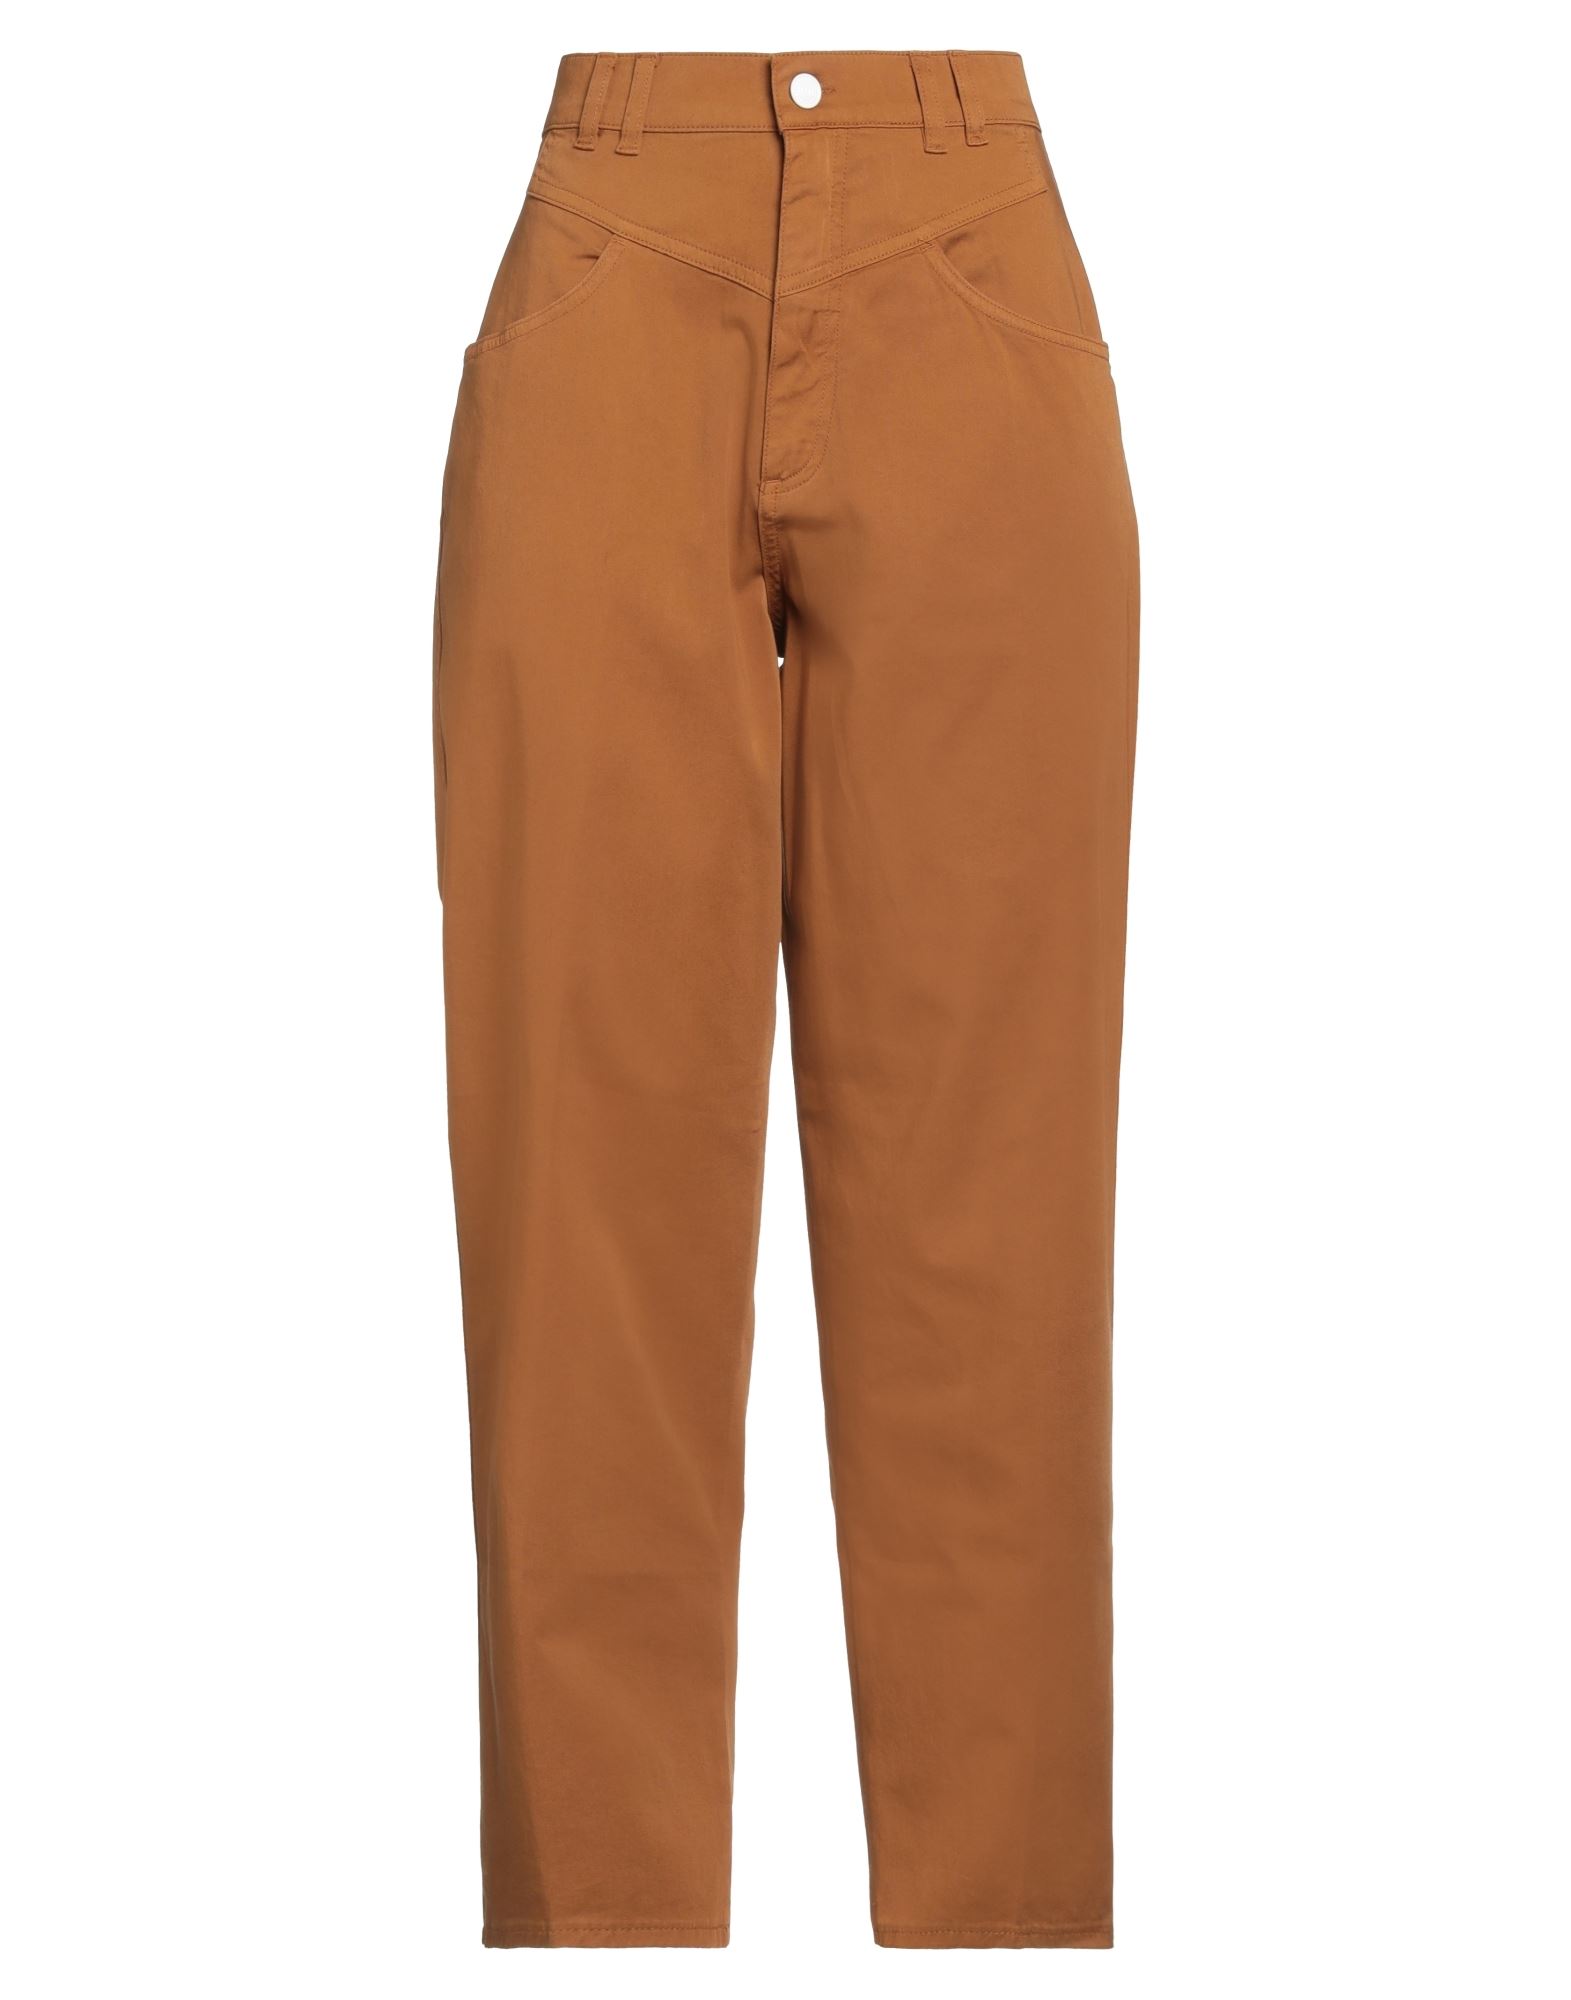 Department 5 Pants In Brown